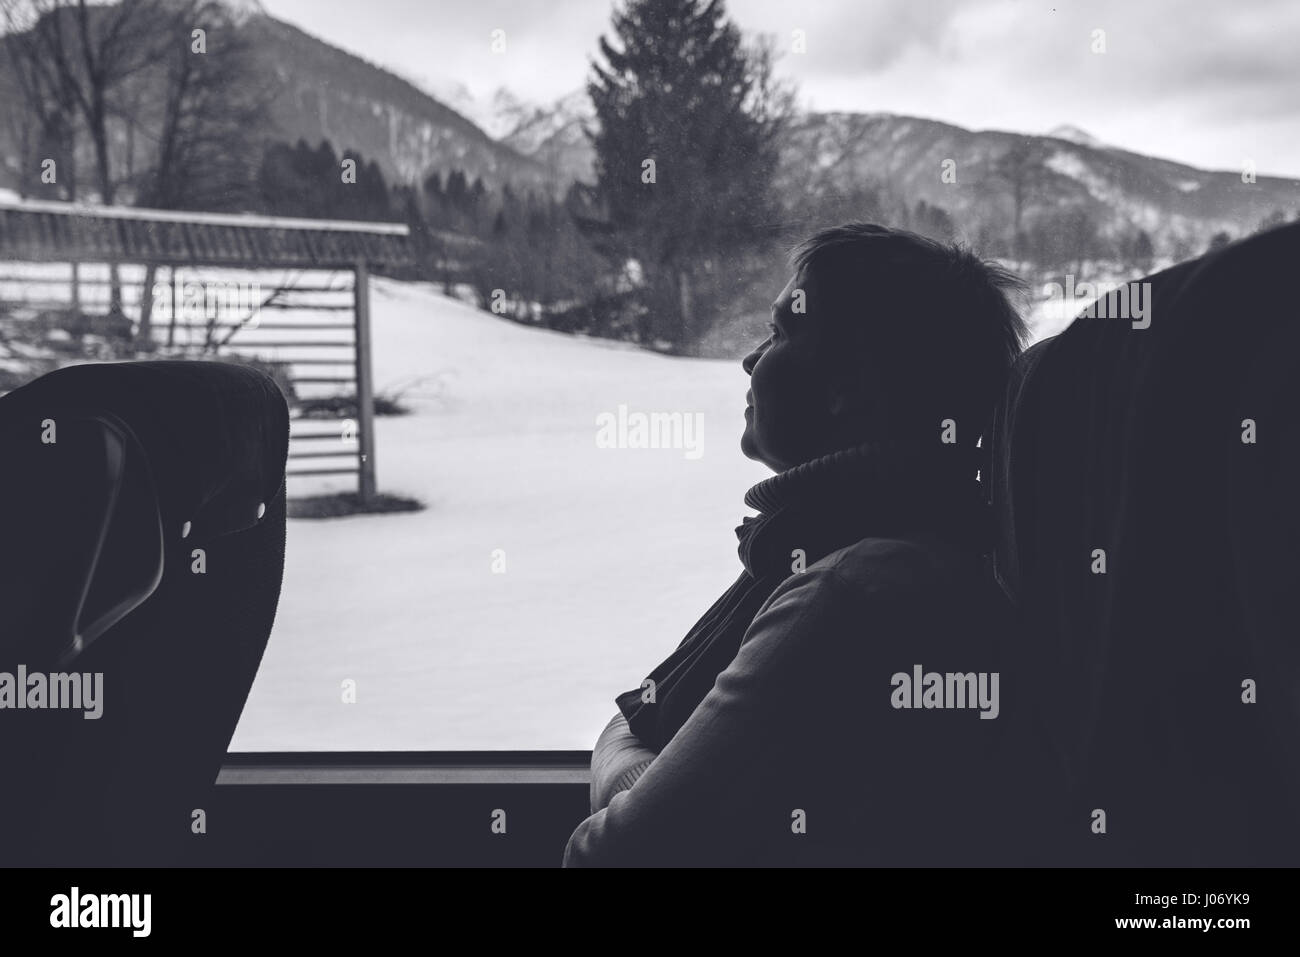 Female tourist on the bus riding through winter mountain landscape, monochromatic black and white image Stock Photo